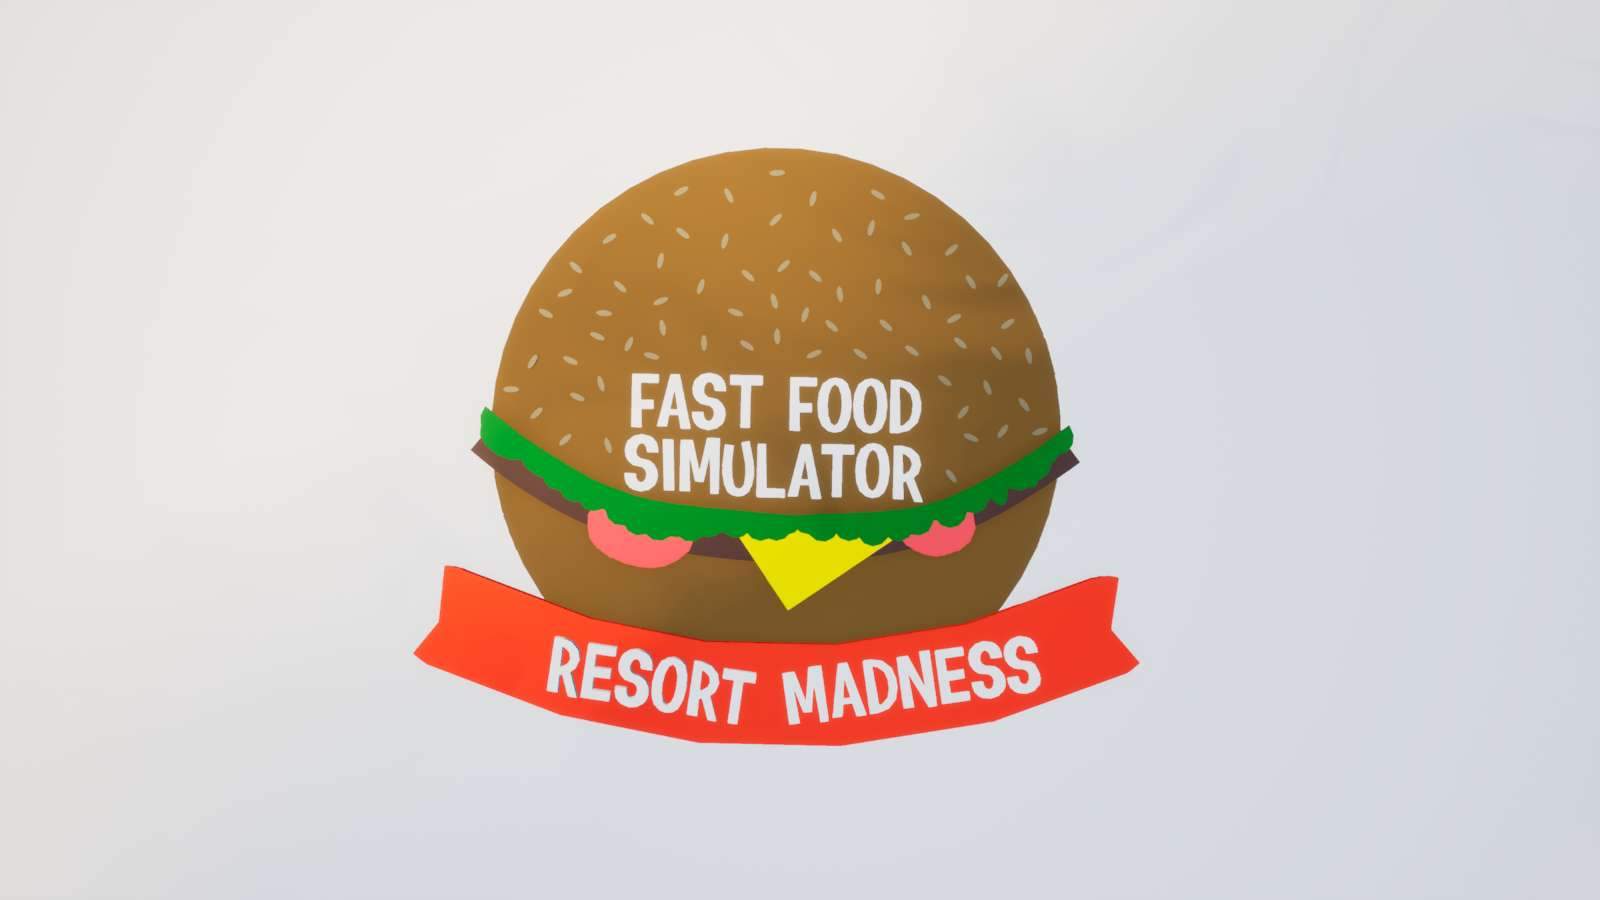 Pineapple Madness Fortnite Map Fast Food Simulator Resort Madness Fortnite Creative Map Code Dropnite